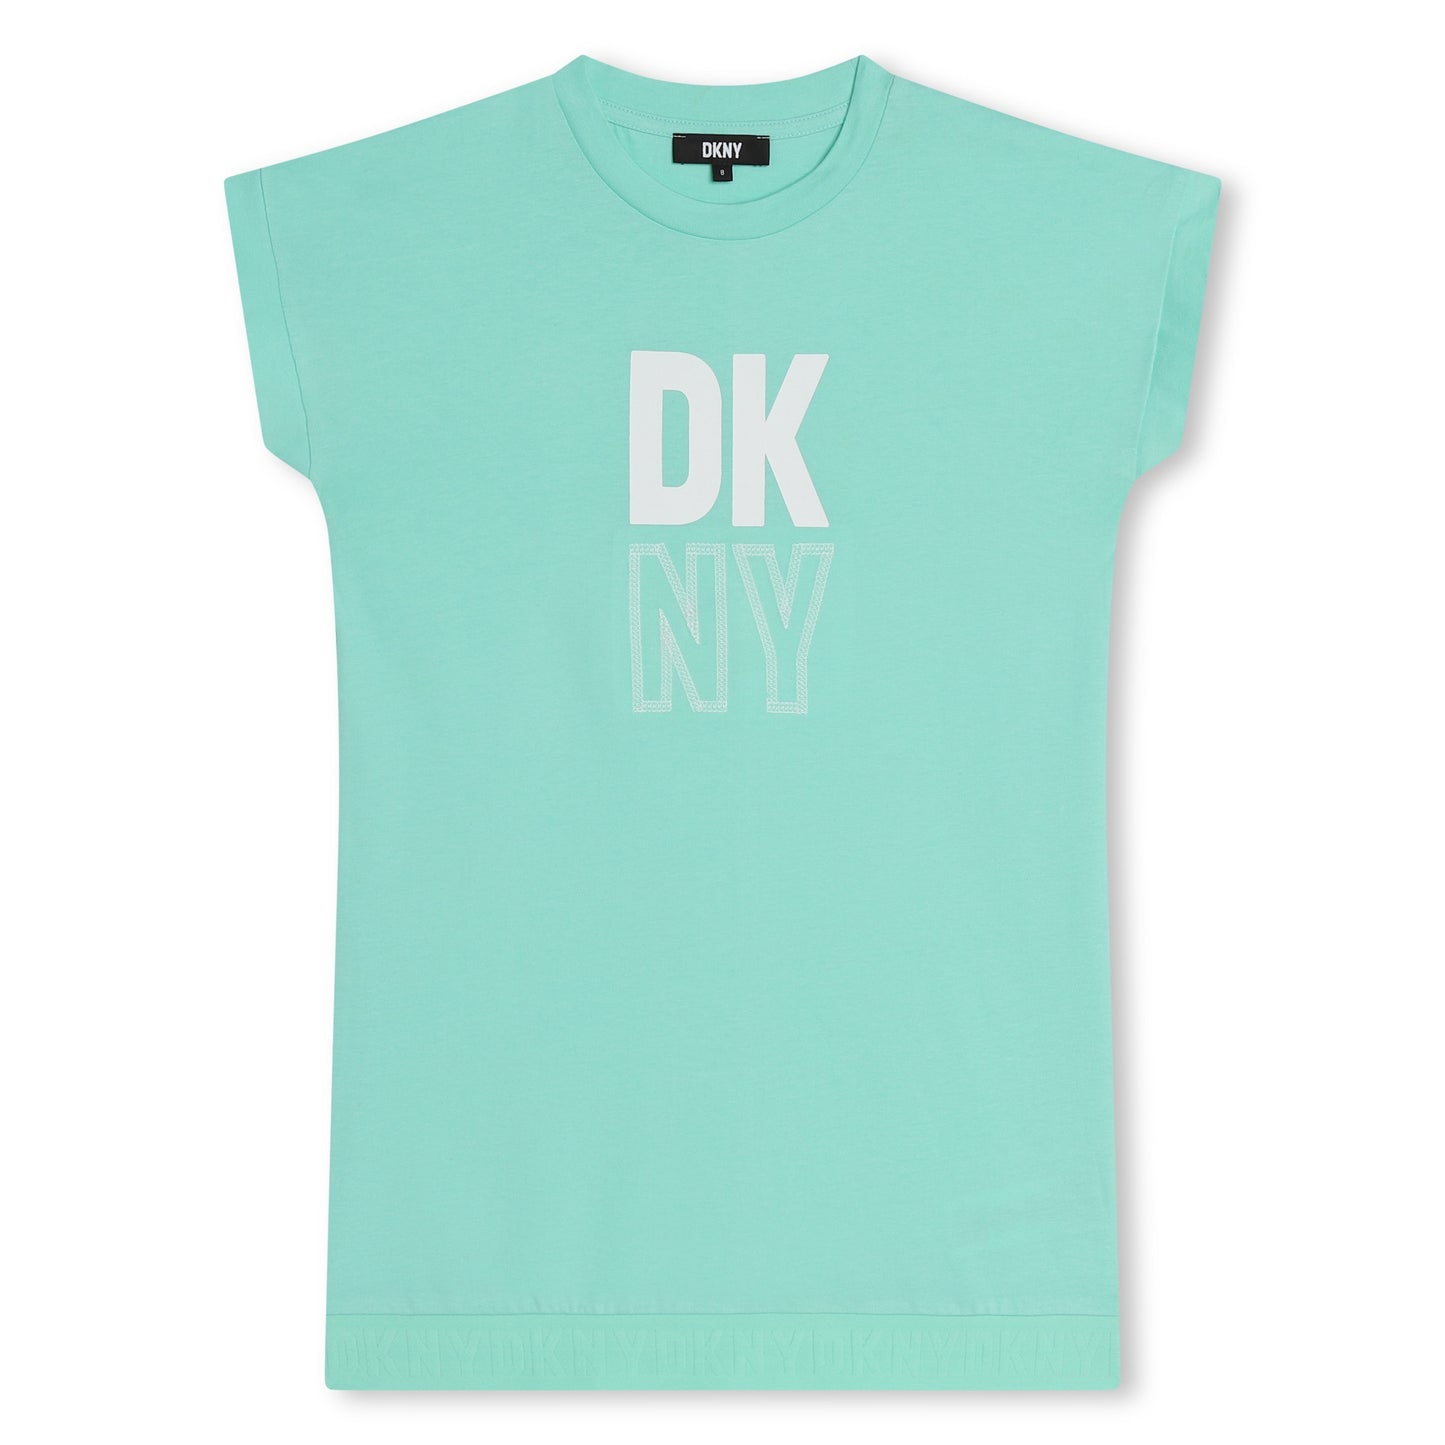 DKNY GIRLS MINT GREEN T SHIRT DRESS